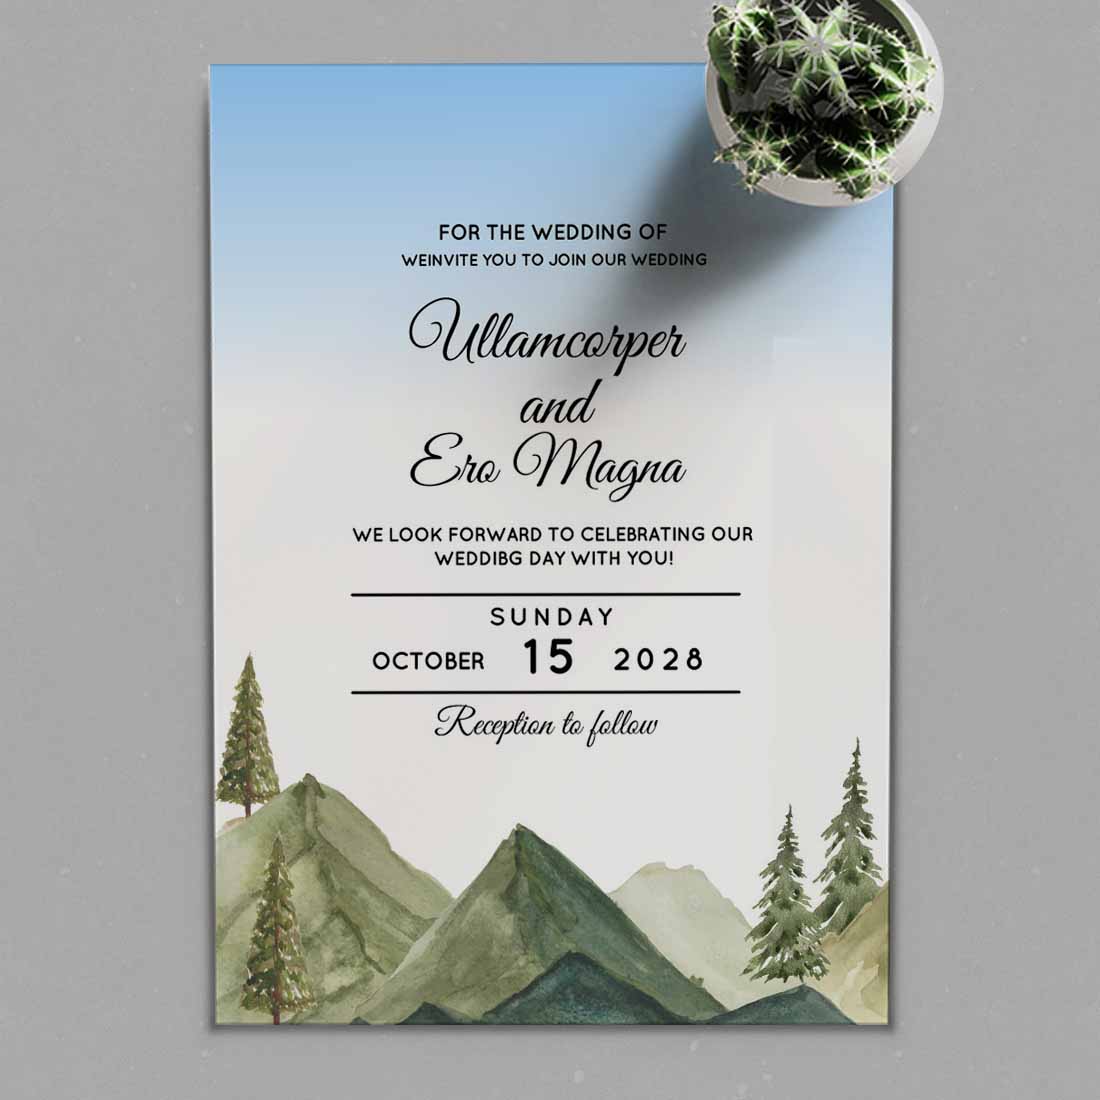 Image of unique wedding card with landscape design